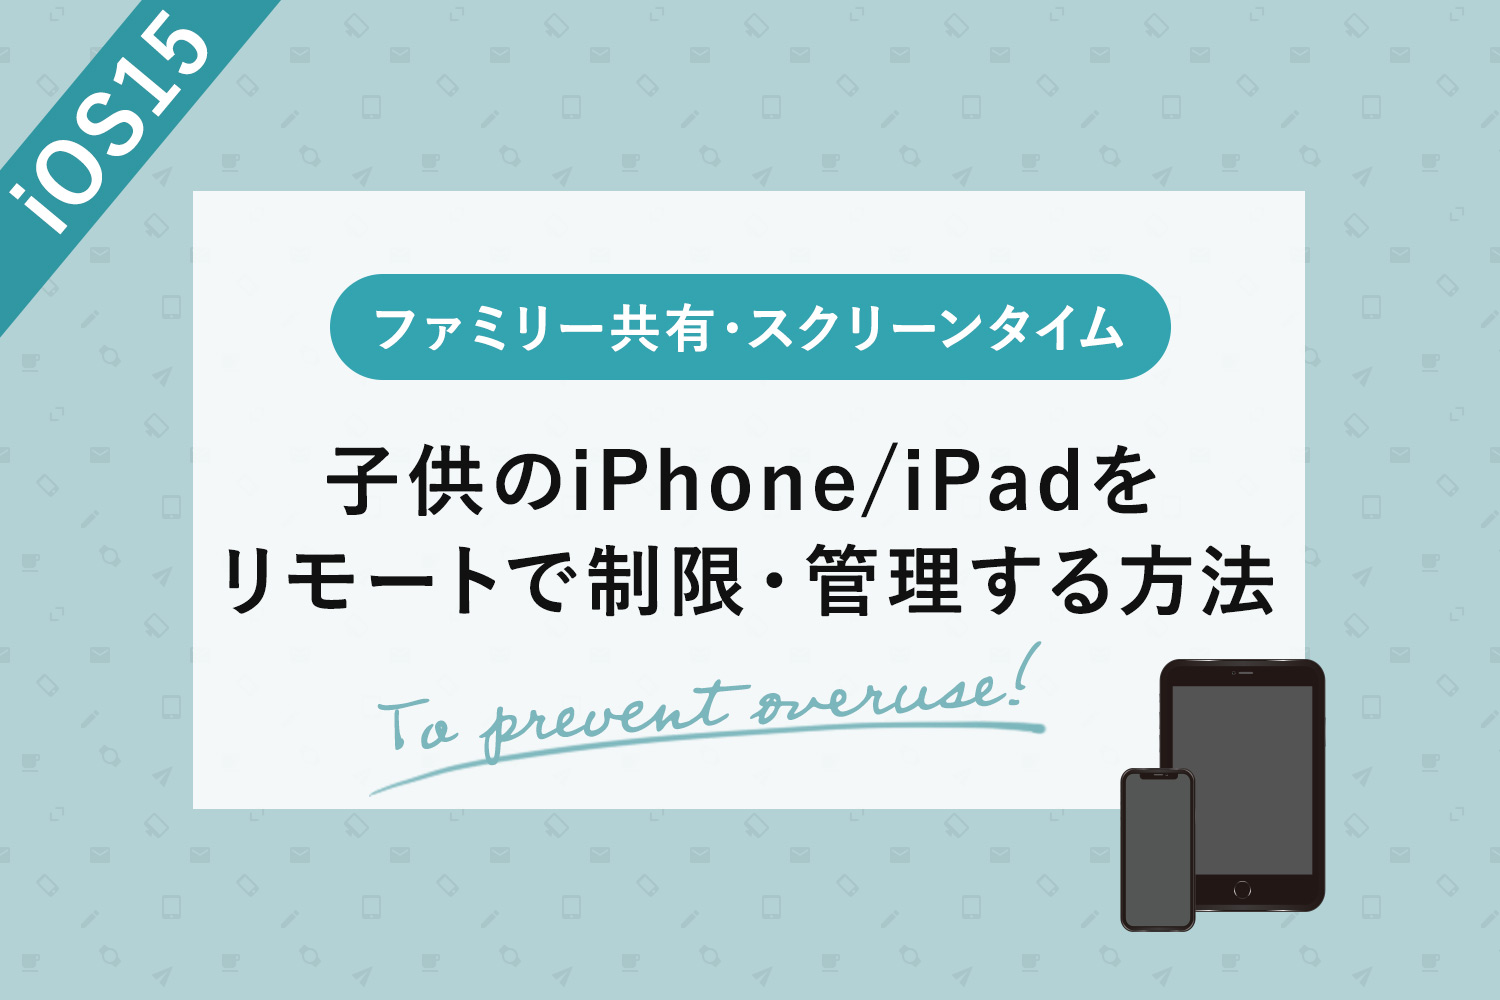 【iOS15】子供のiPhone/iPadをリモートで制限・管理する方法【子供用Apple ID作成とファミリー共有】